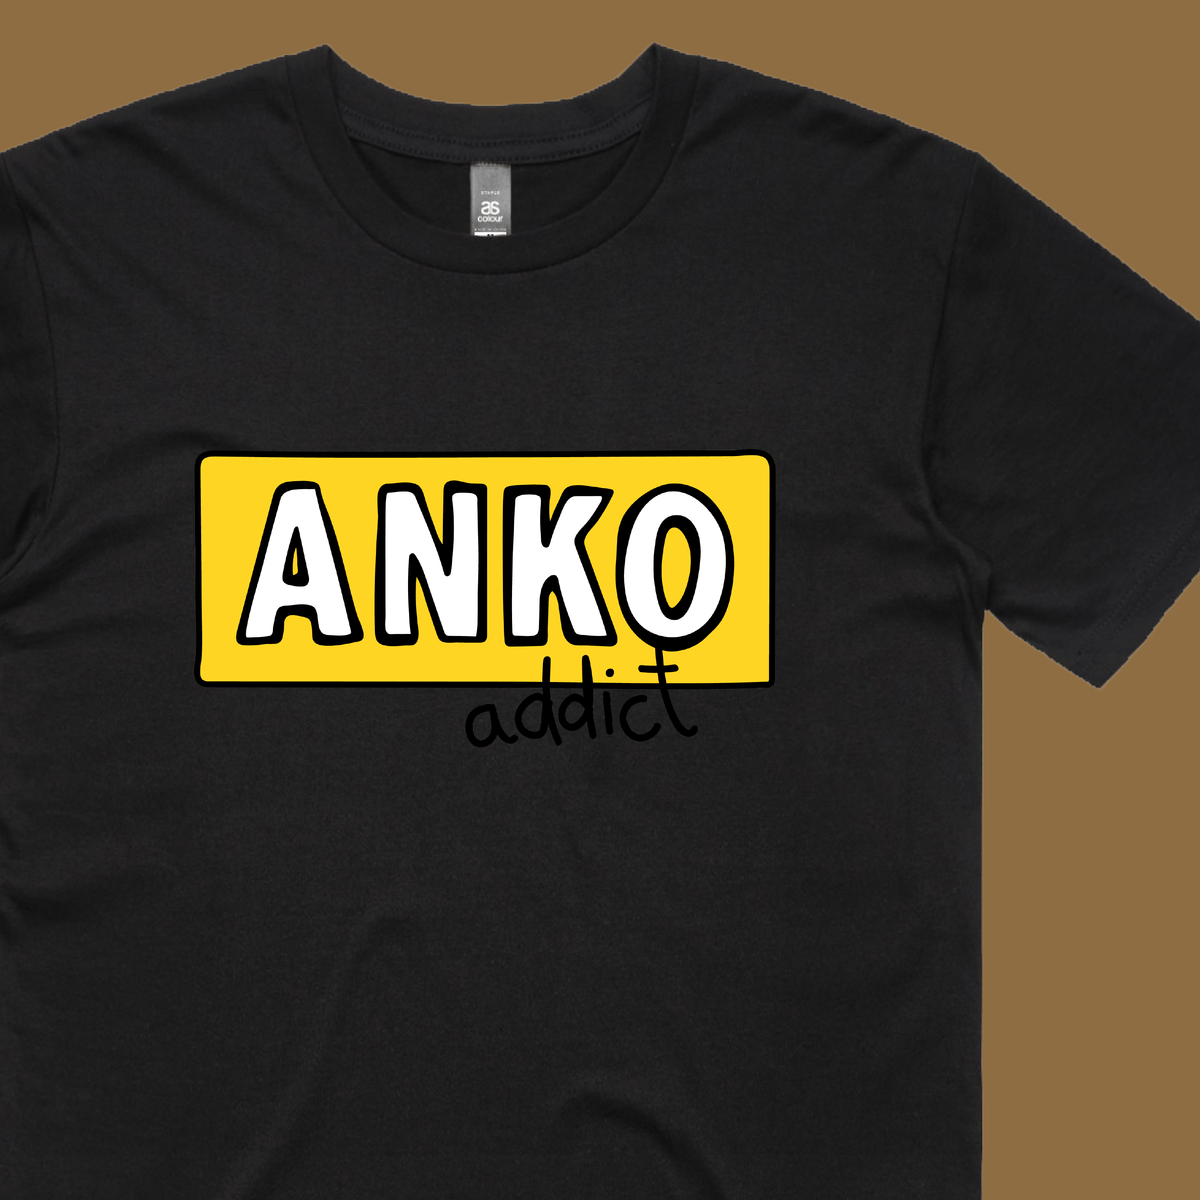 ANKO Addict 💉 - Men's T Shirt